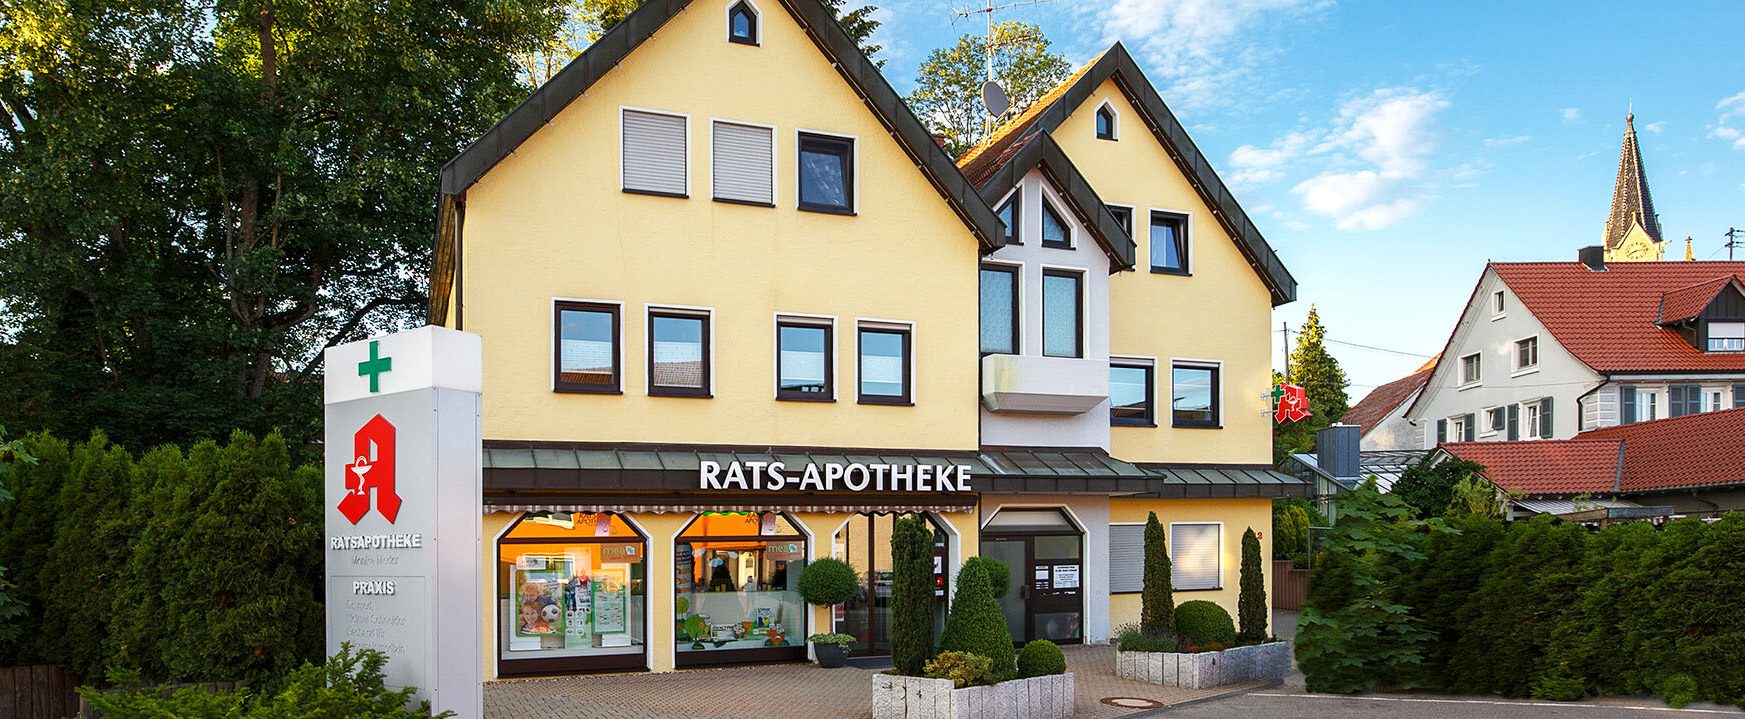 Rats-Apotheke Messkirch